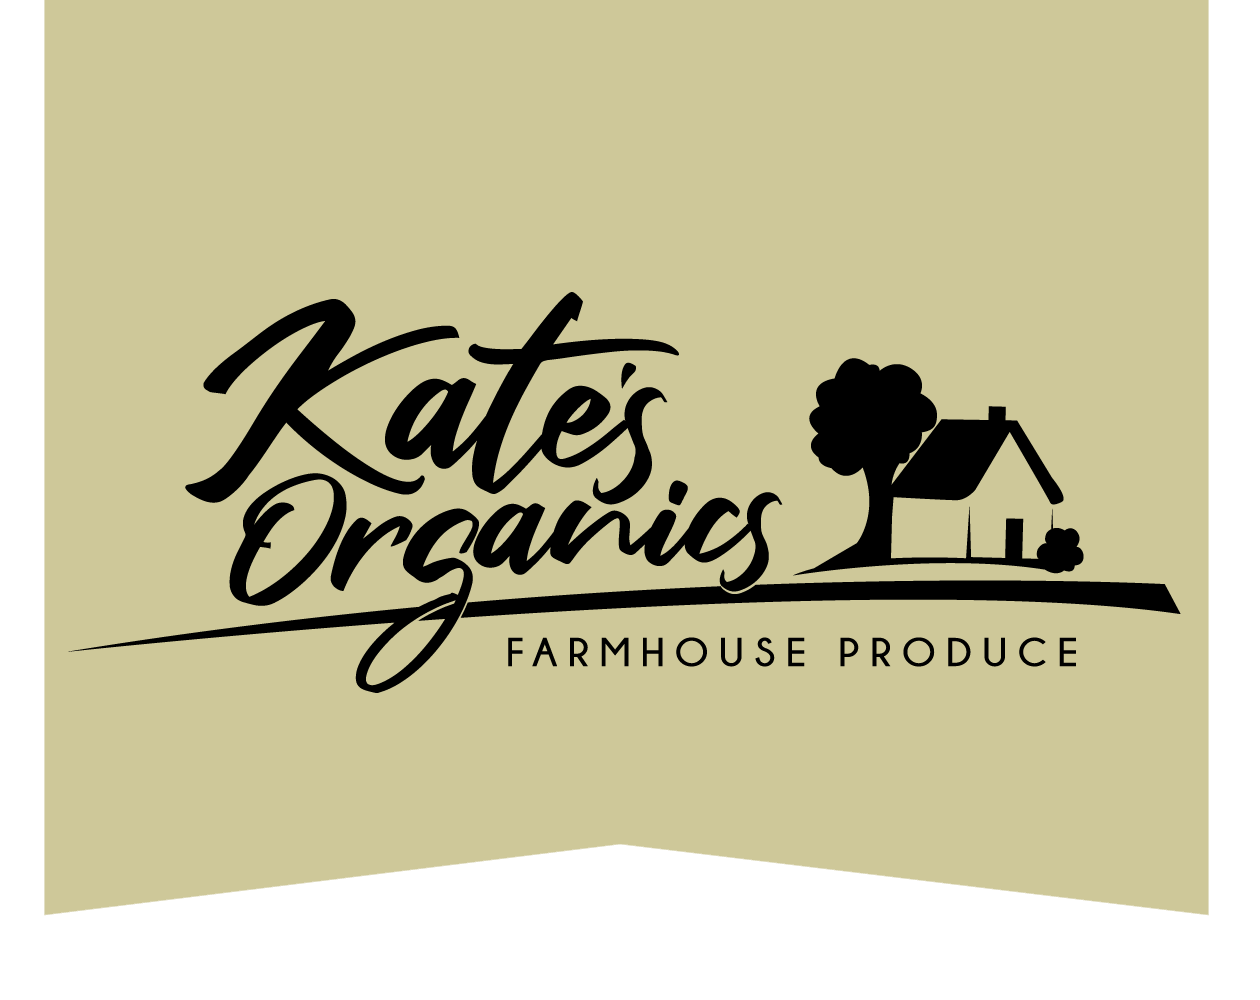 Kate’s Organics Gold Coast